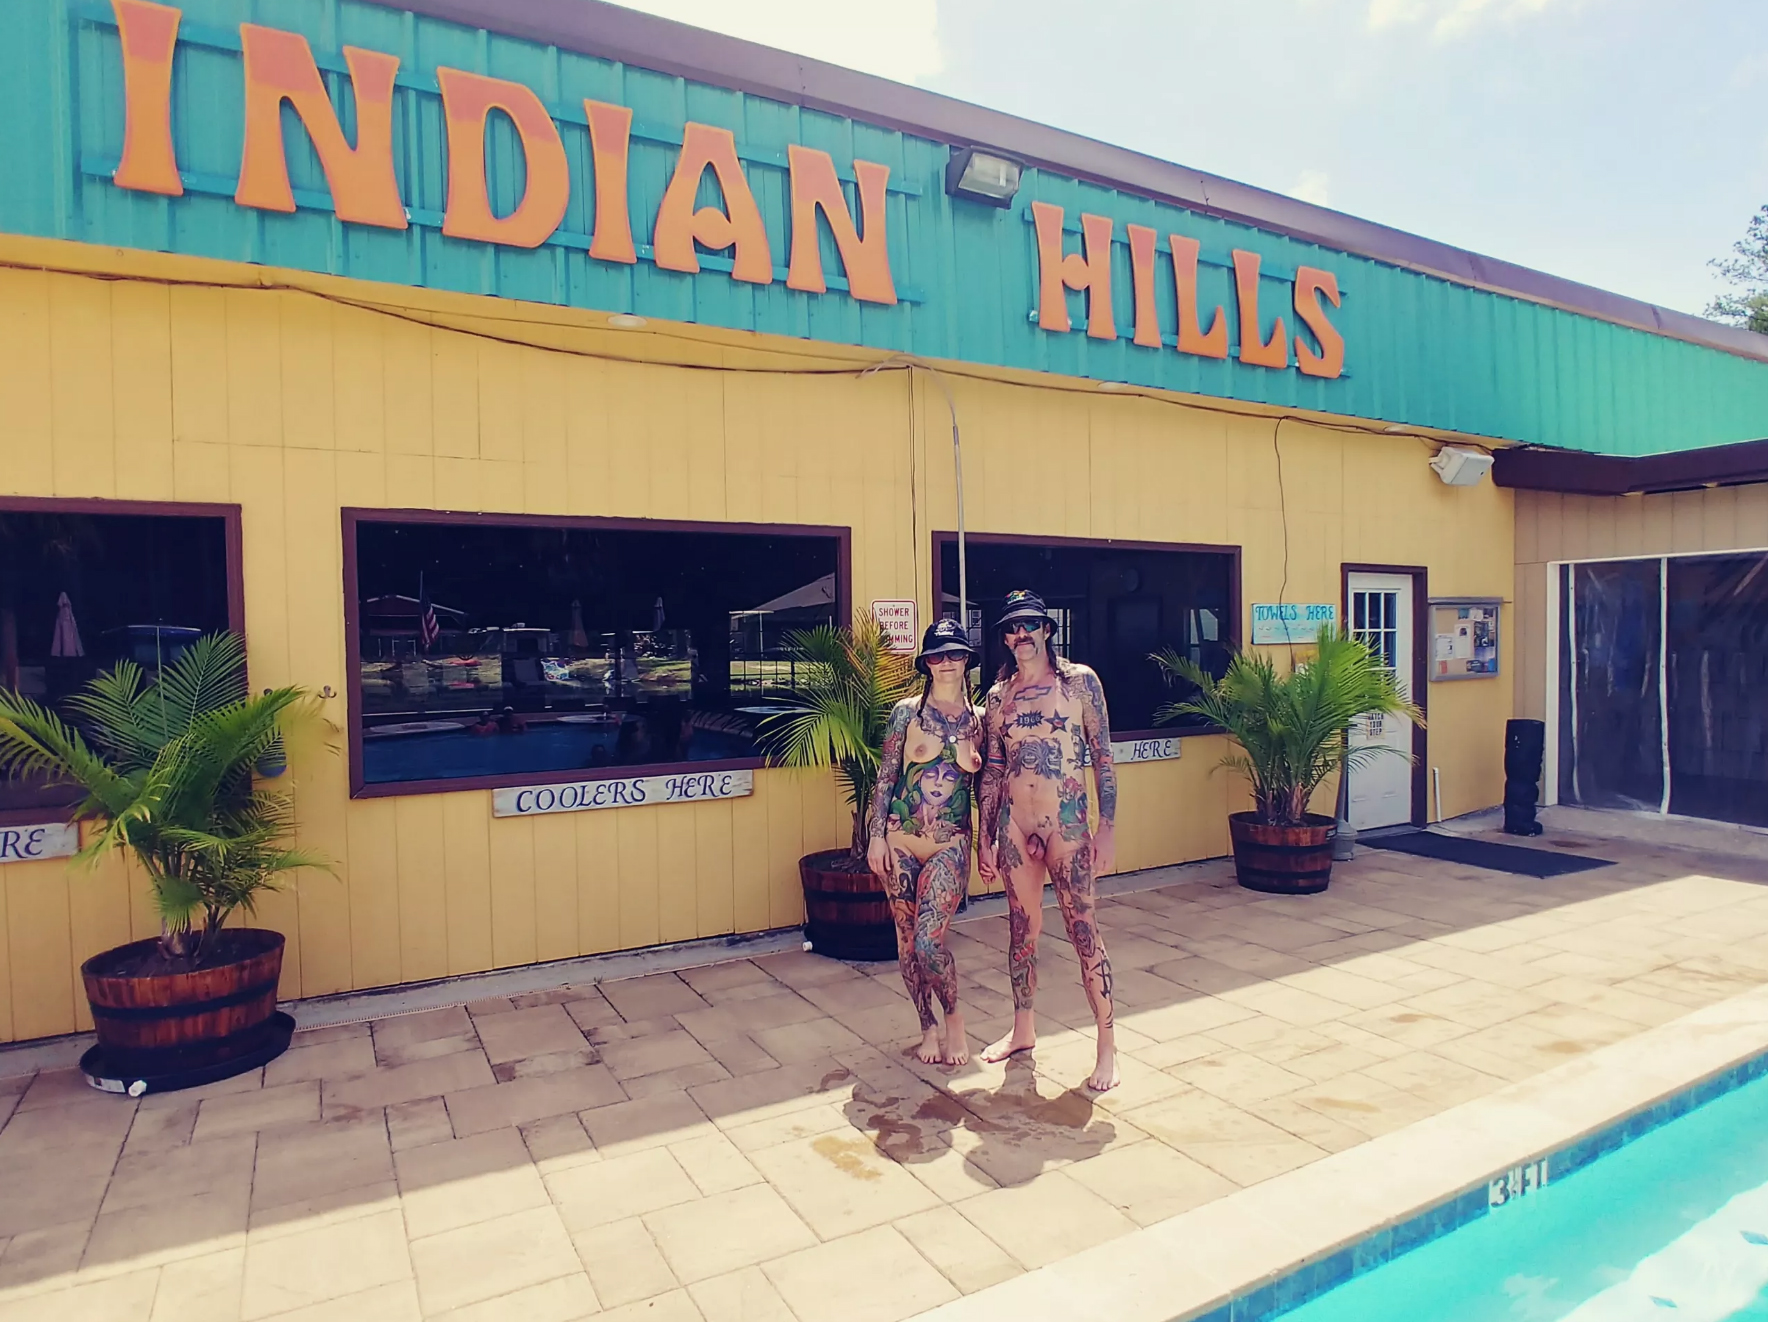 Indian hills nudist park reviews